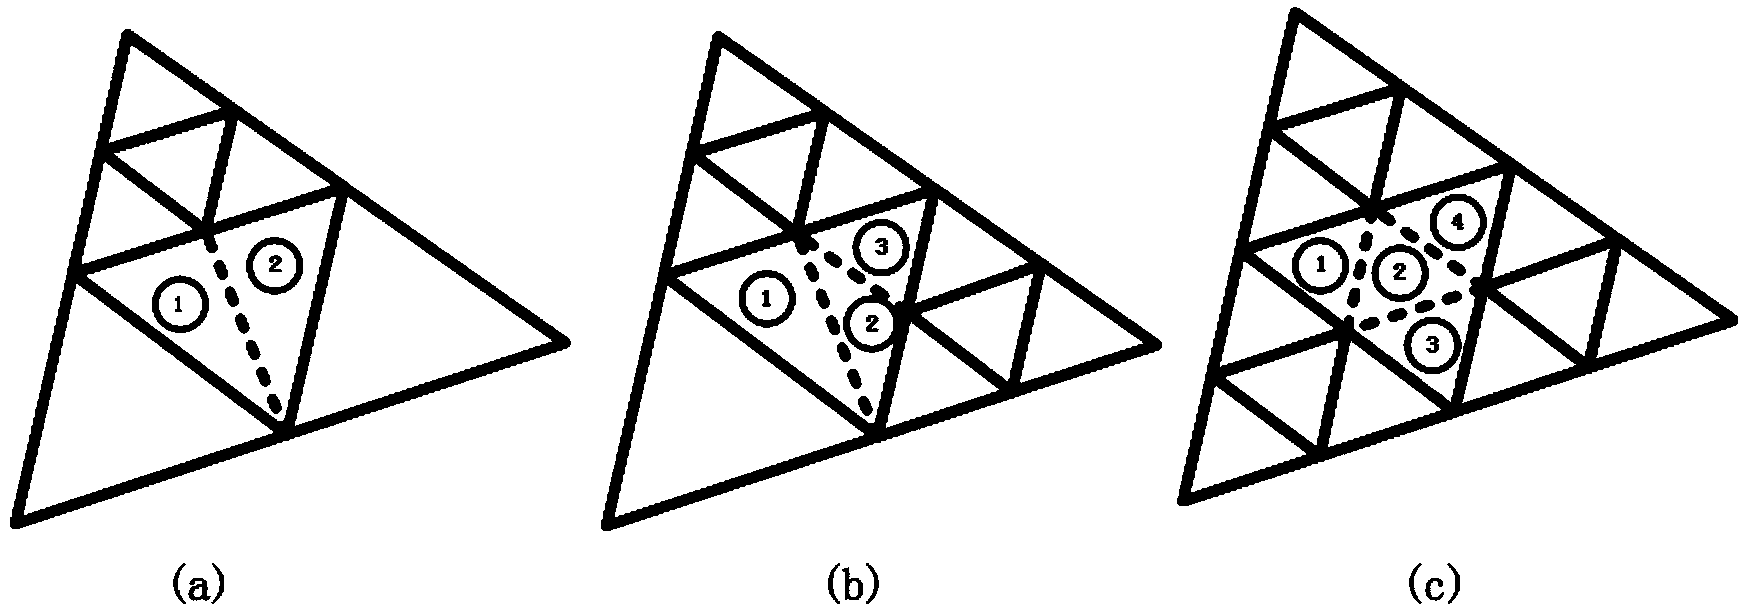 Adaptive Loop subdivision surface drawing method based on irregular region